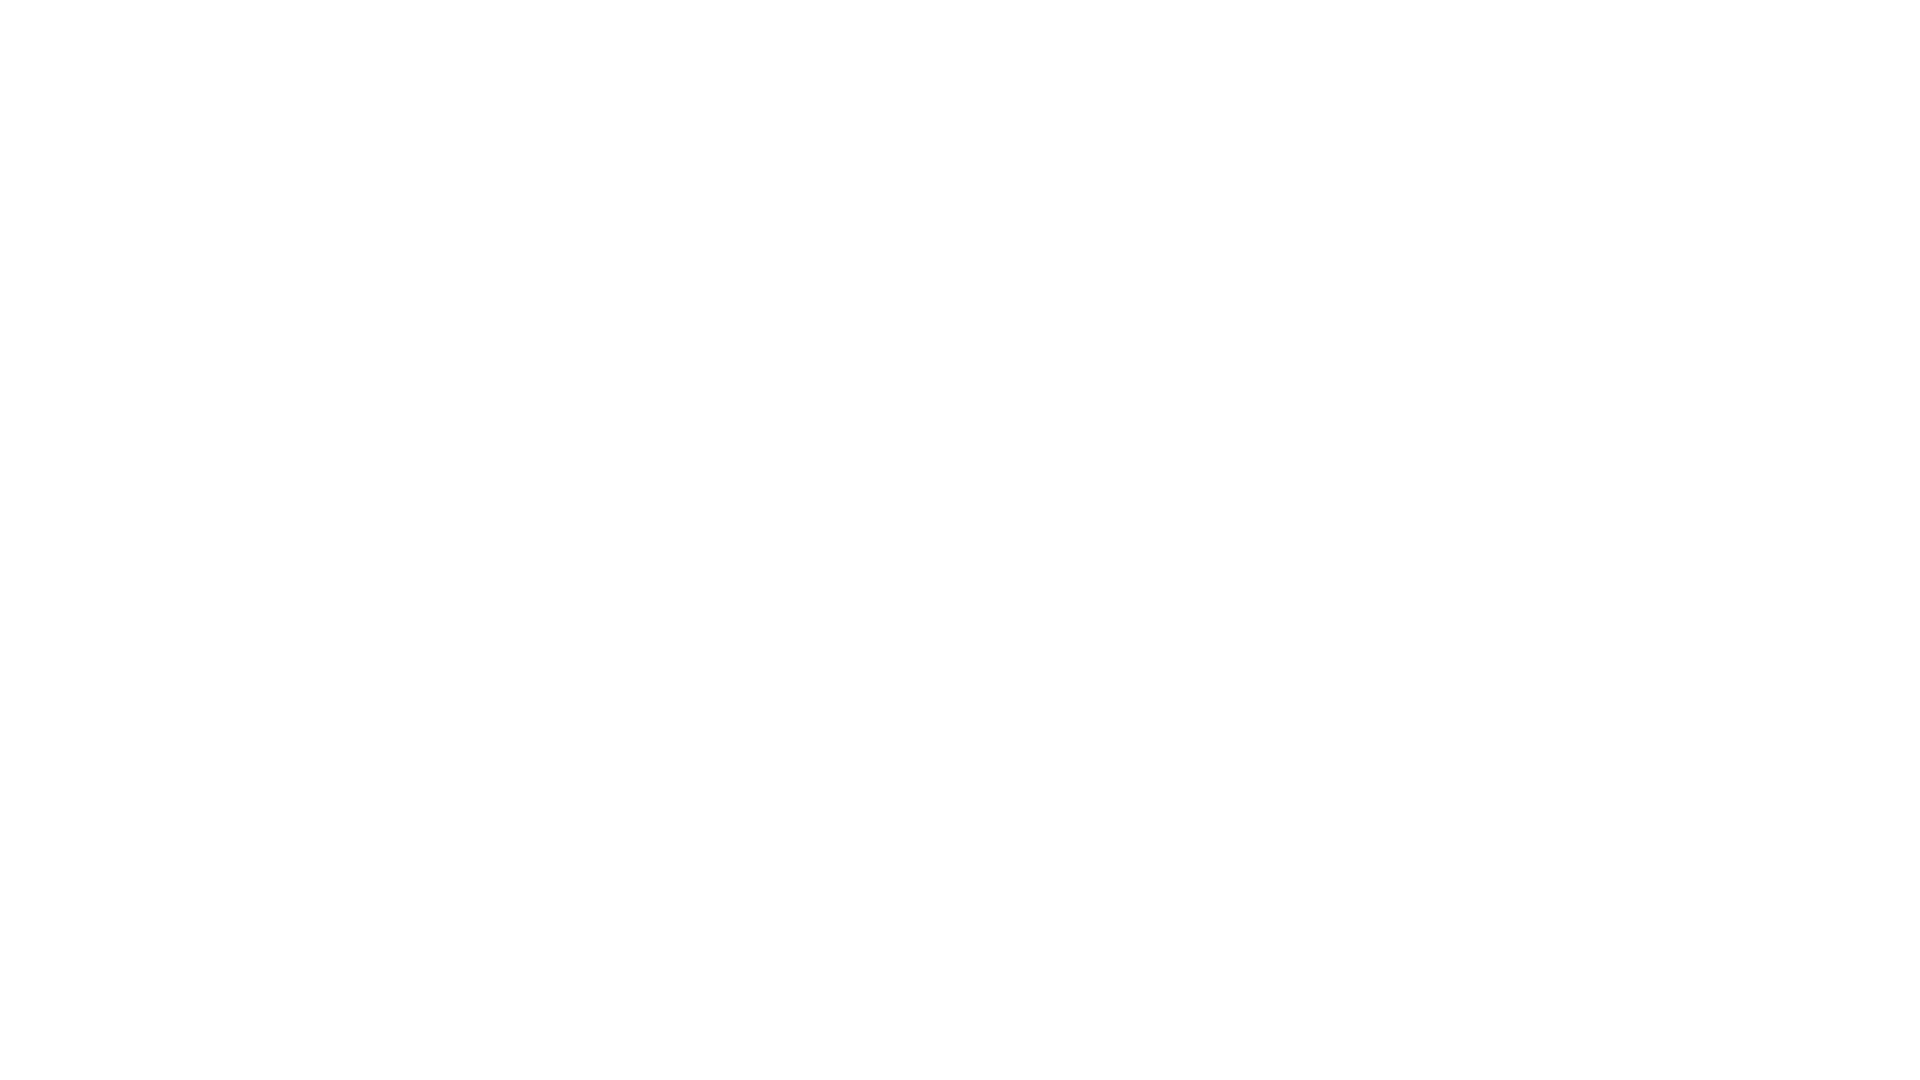 Plan de Transformación y Resilencia. Gobierno de España.